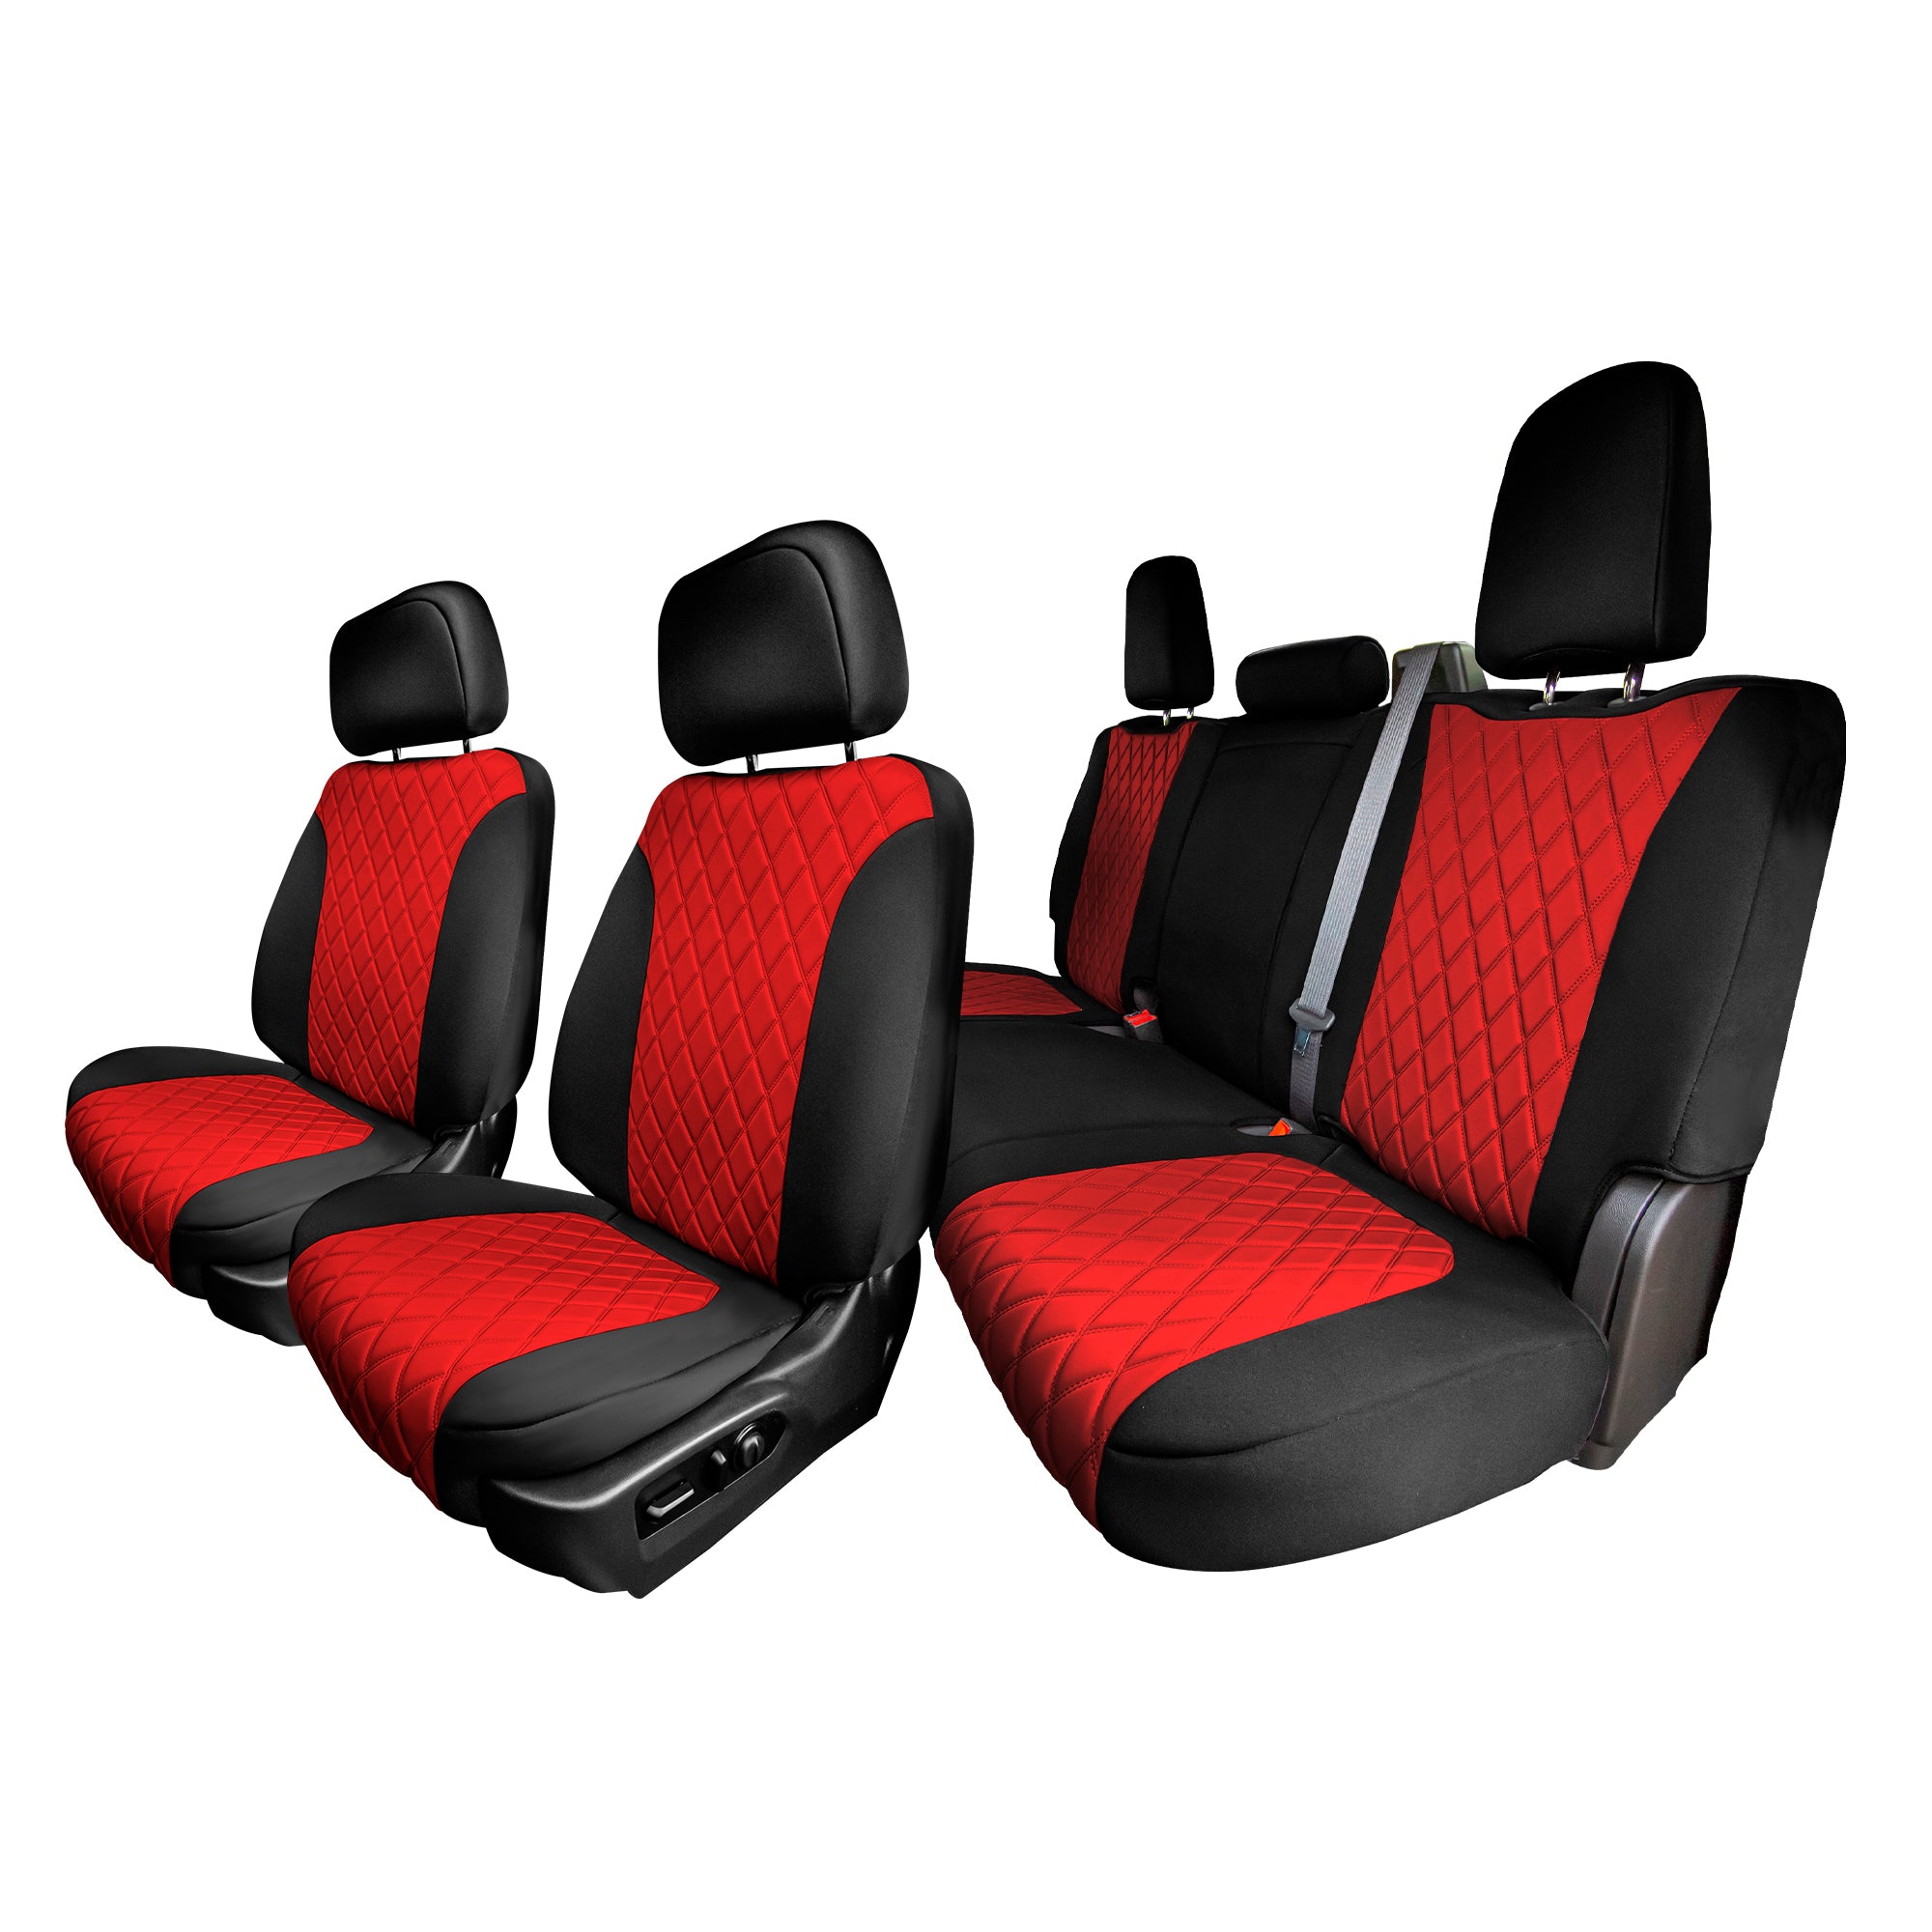 Chevrolet Silverado 1500 2500HD 3500HD WT LT - 2019 - 2023 - Full Set Seat Covers - Red Ultraflex Neoprene